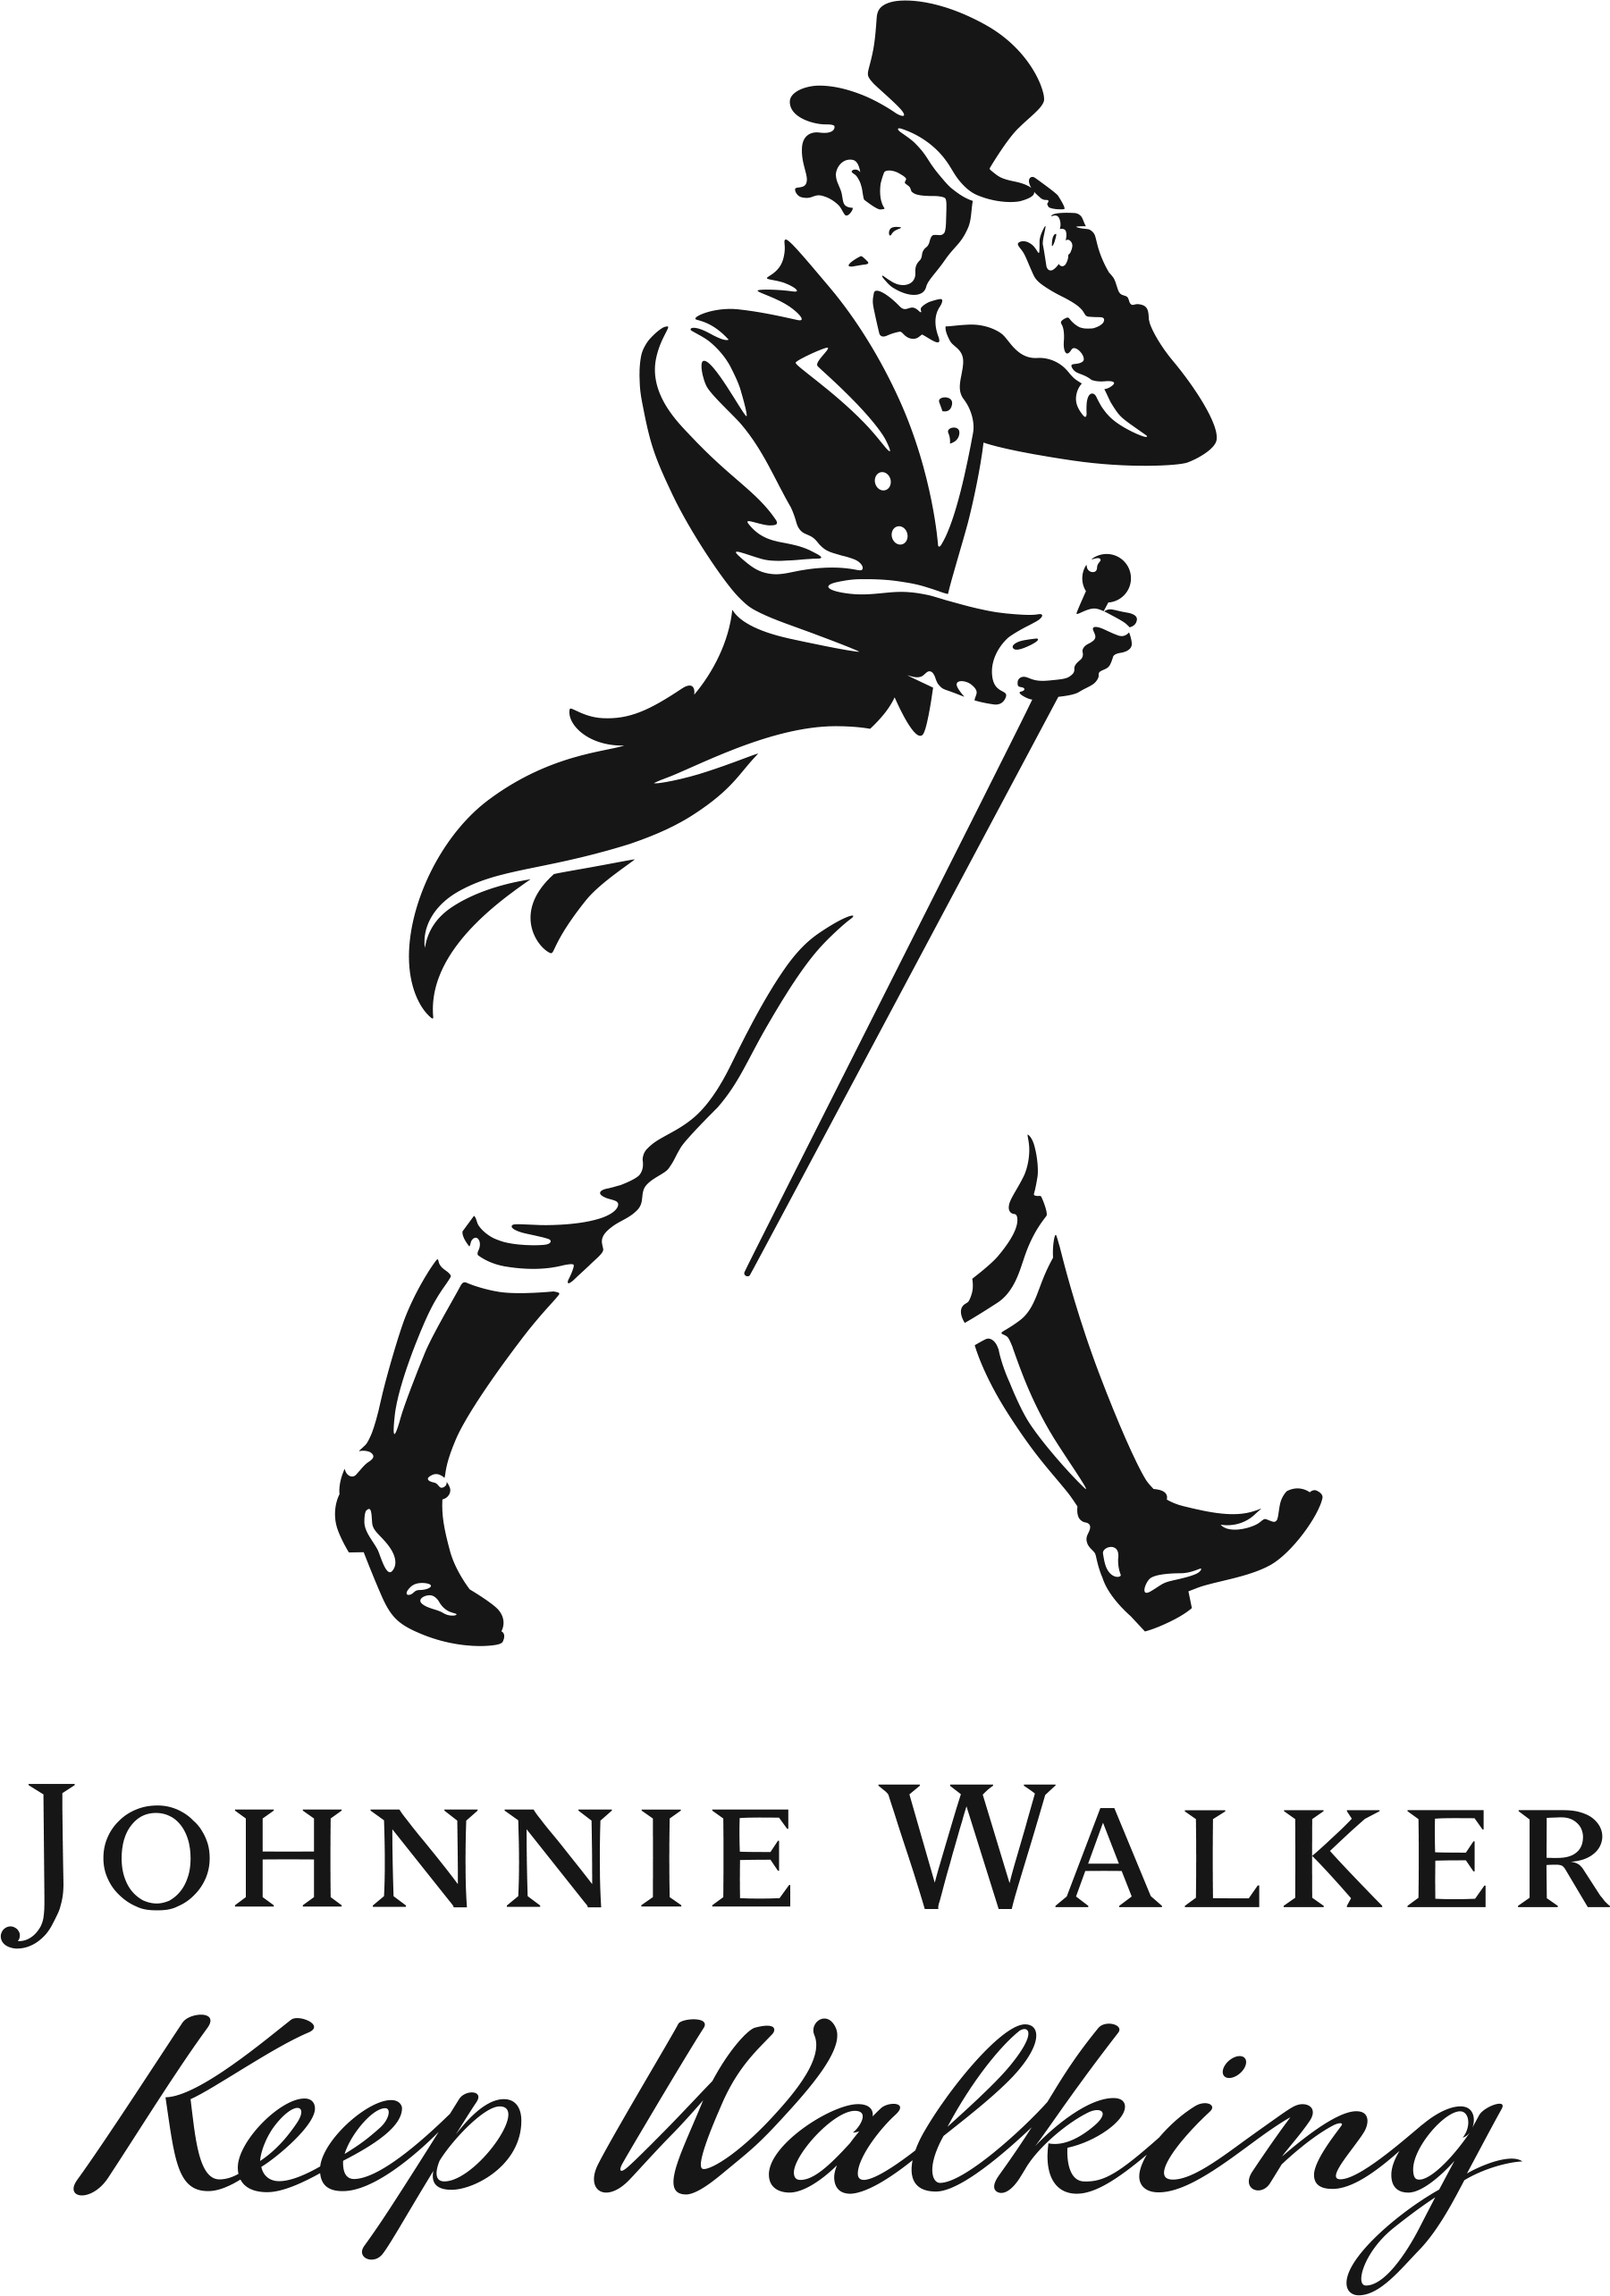 johnny-walker-keepwalking.png